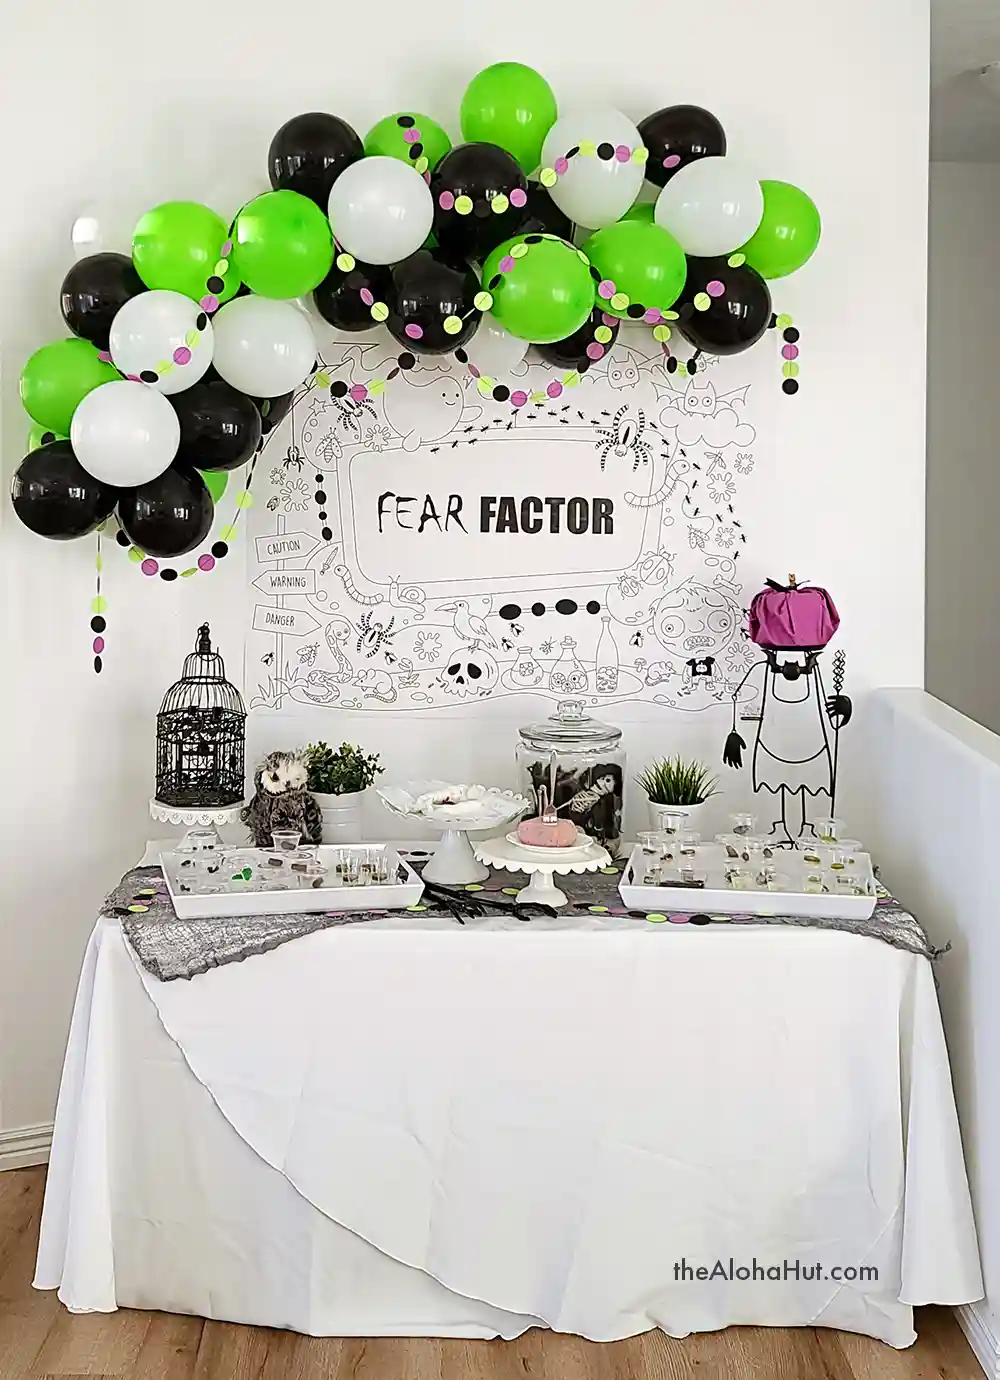 Fear Factor Party Ideas - giant coloring backdrop